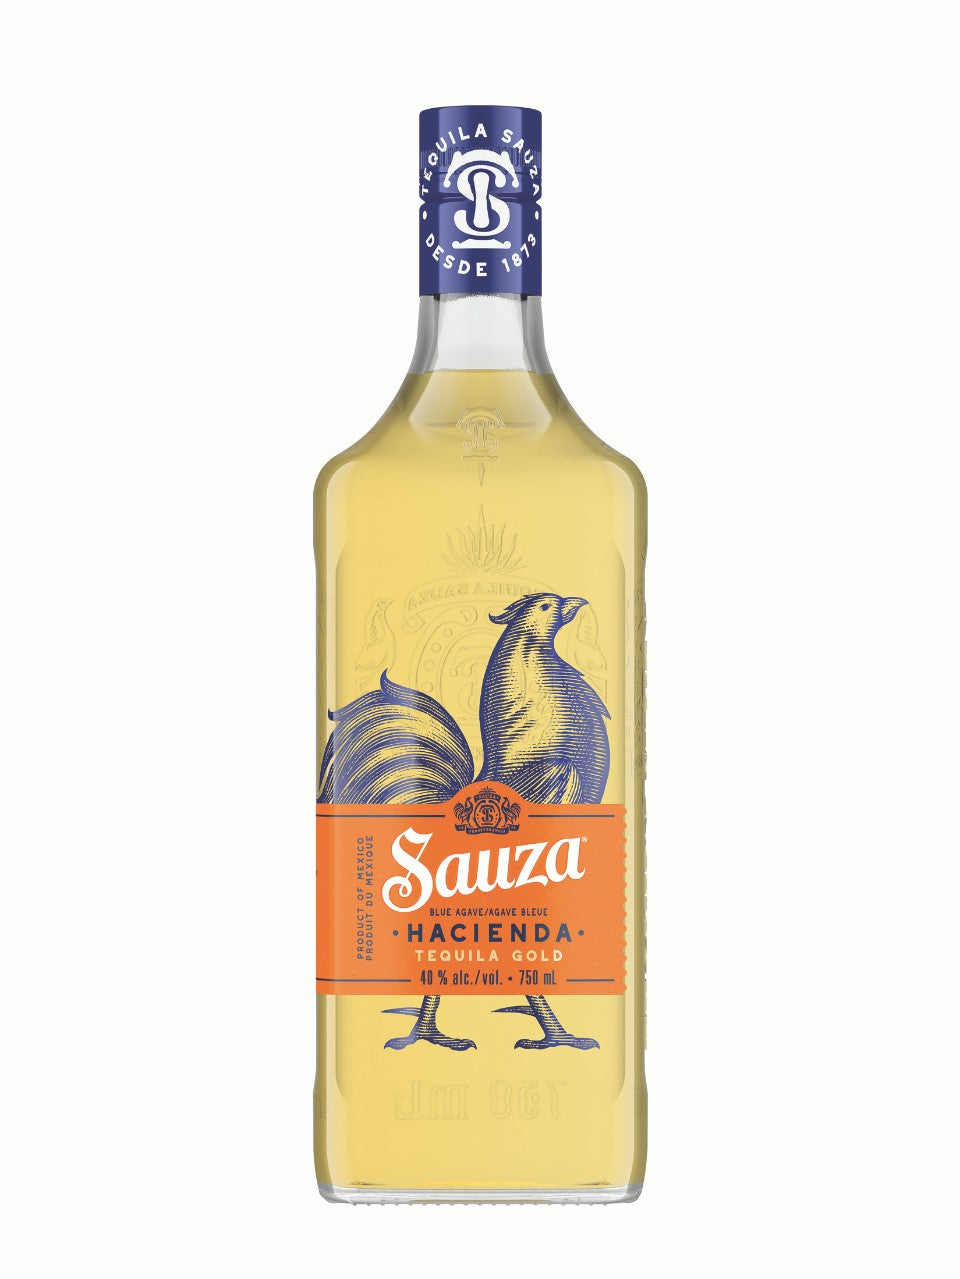 Sauza Gold Tequila 750 mL bottle